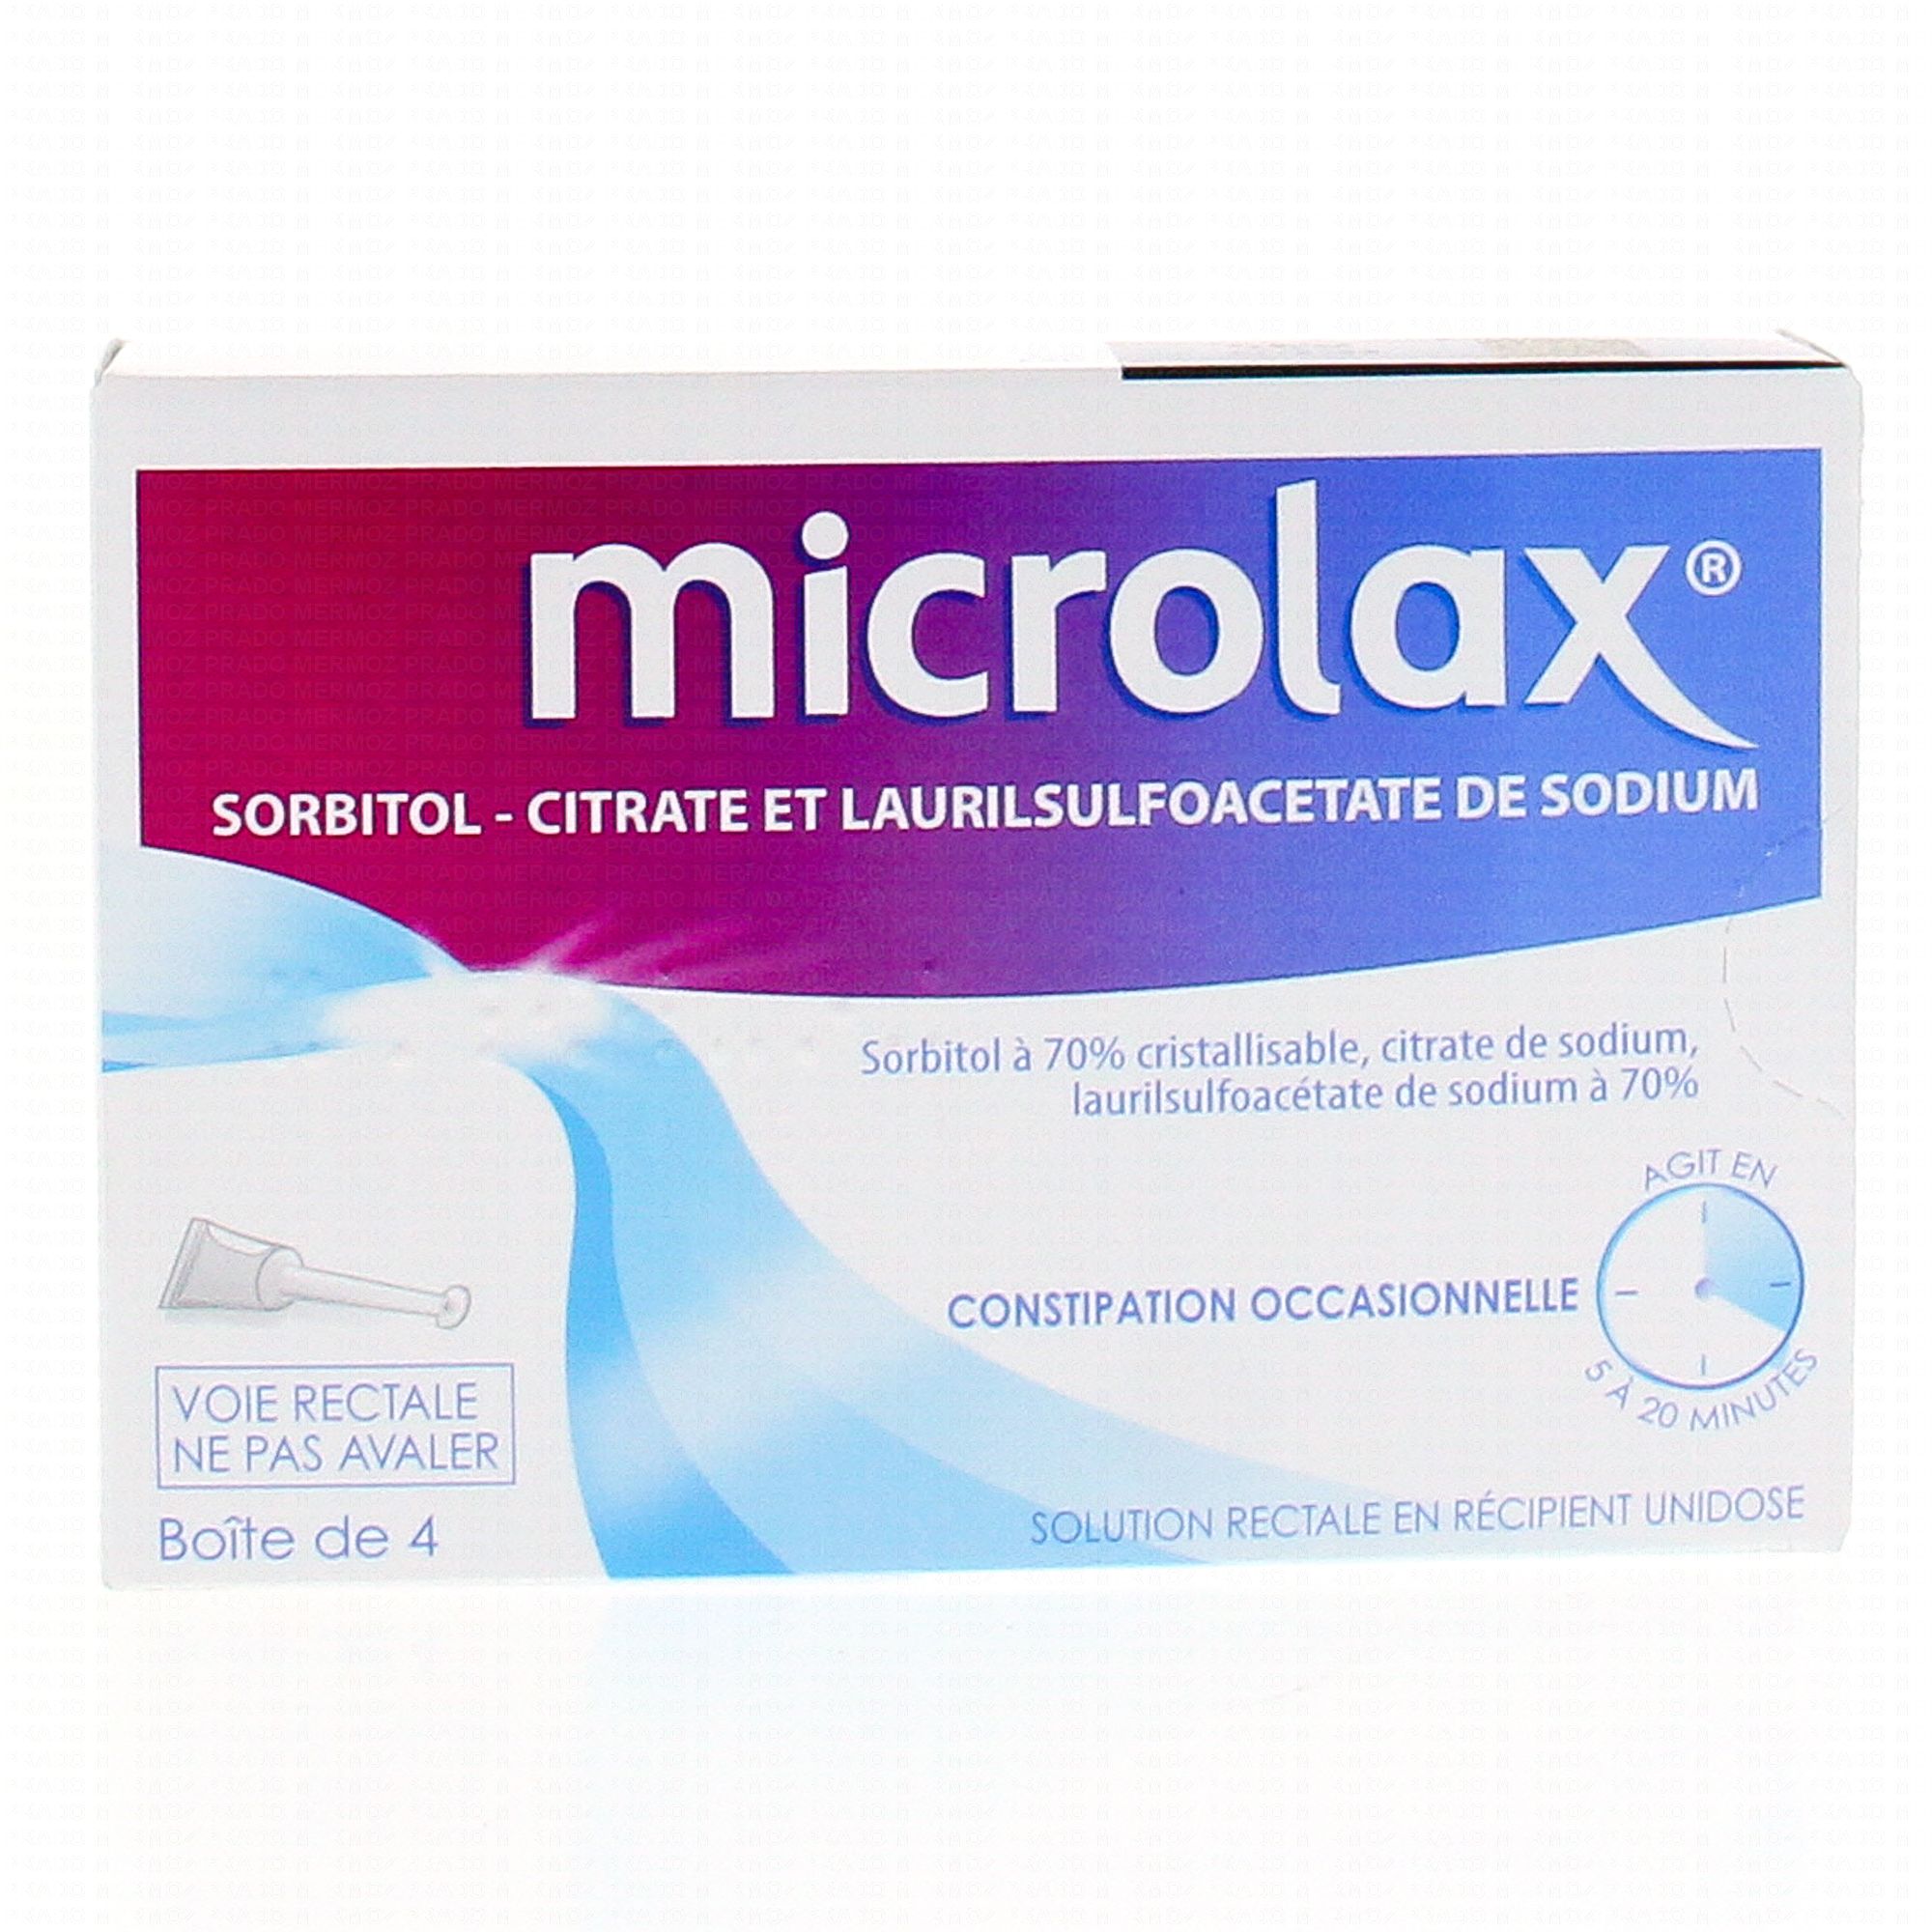 https://www.pharmacie-prado-mermoz.com/client/840002/media/files/Microlax-sorbitol-citrate-et-laurilsulfoacetate-de-sodium-20494_101_1615567138.jpg